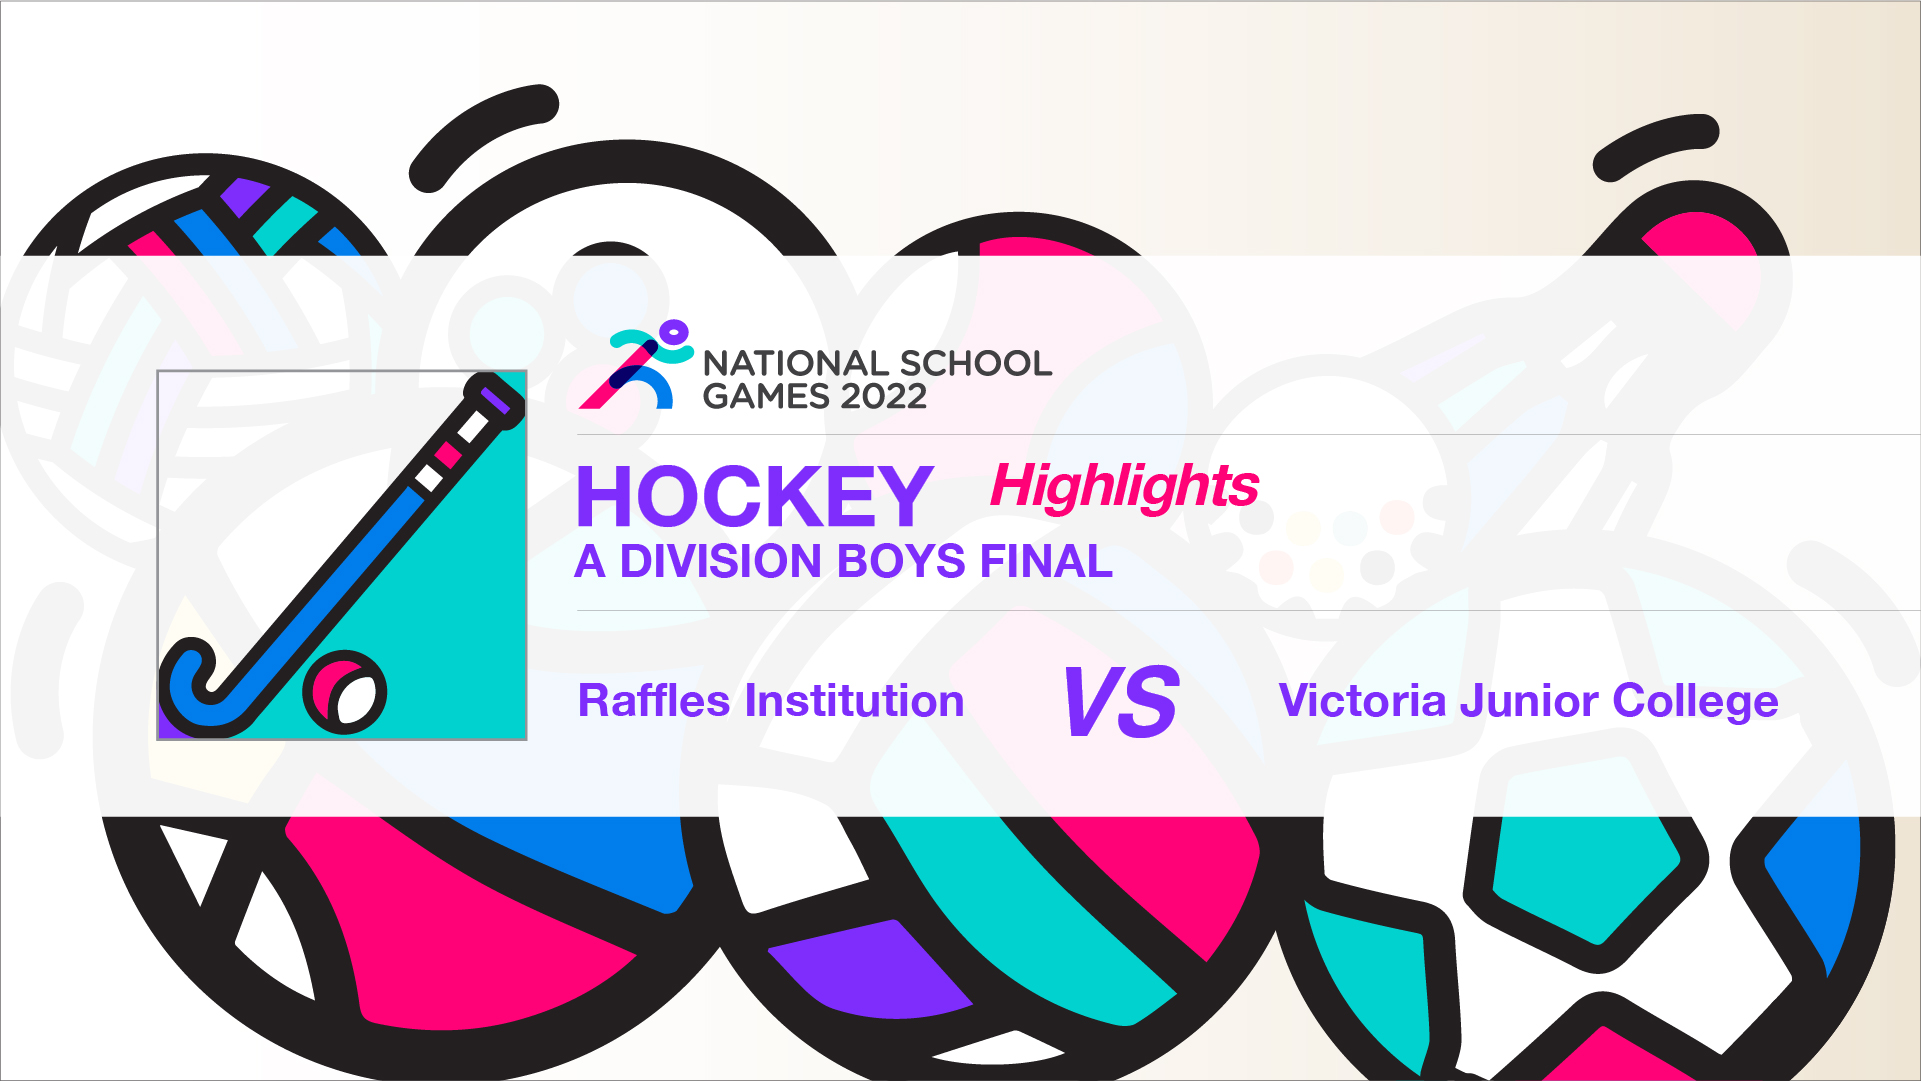 SSSC Hockey A Division Boys Final Live | Raffles Institution vs Victoria Junior College - Highlights